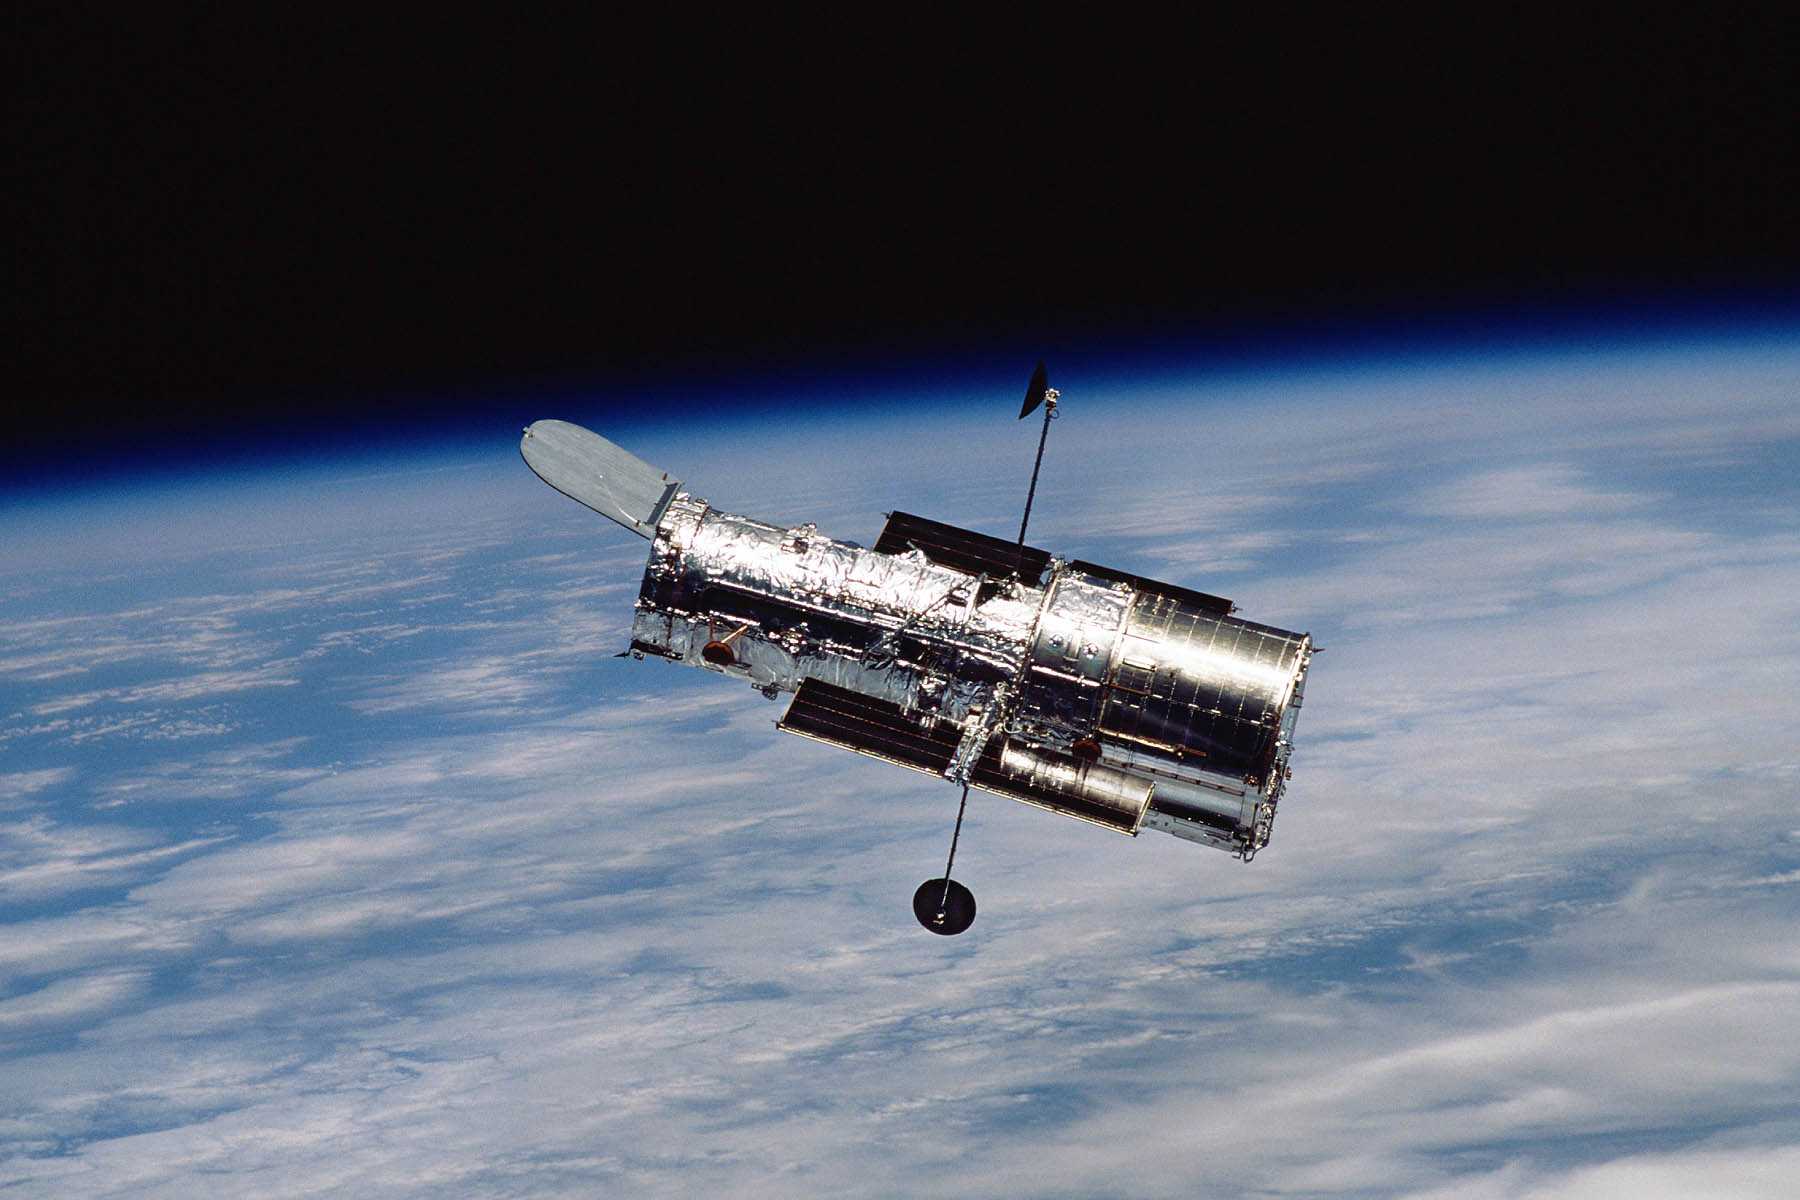 File:Hubble 4x61.jpg - Wikimedia Commons